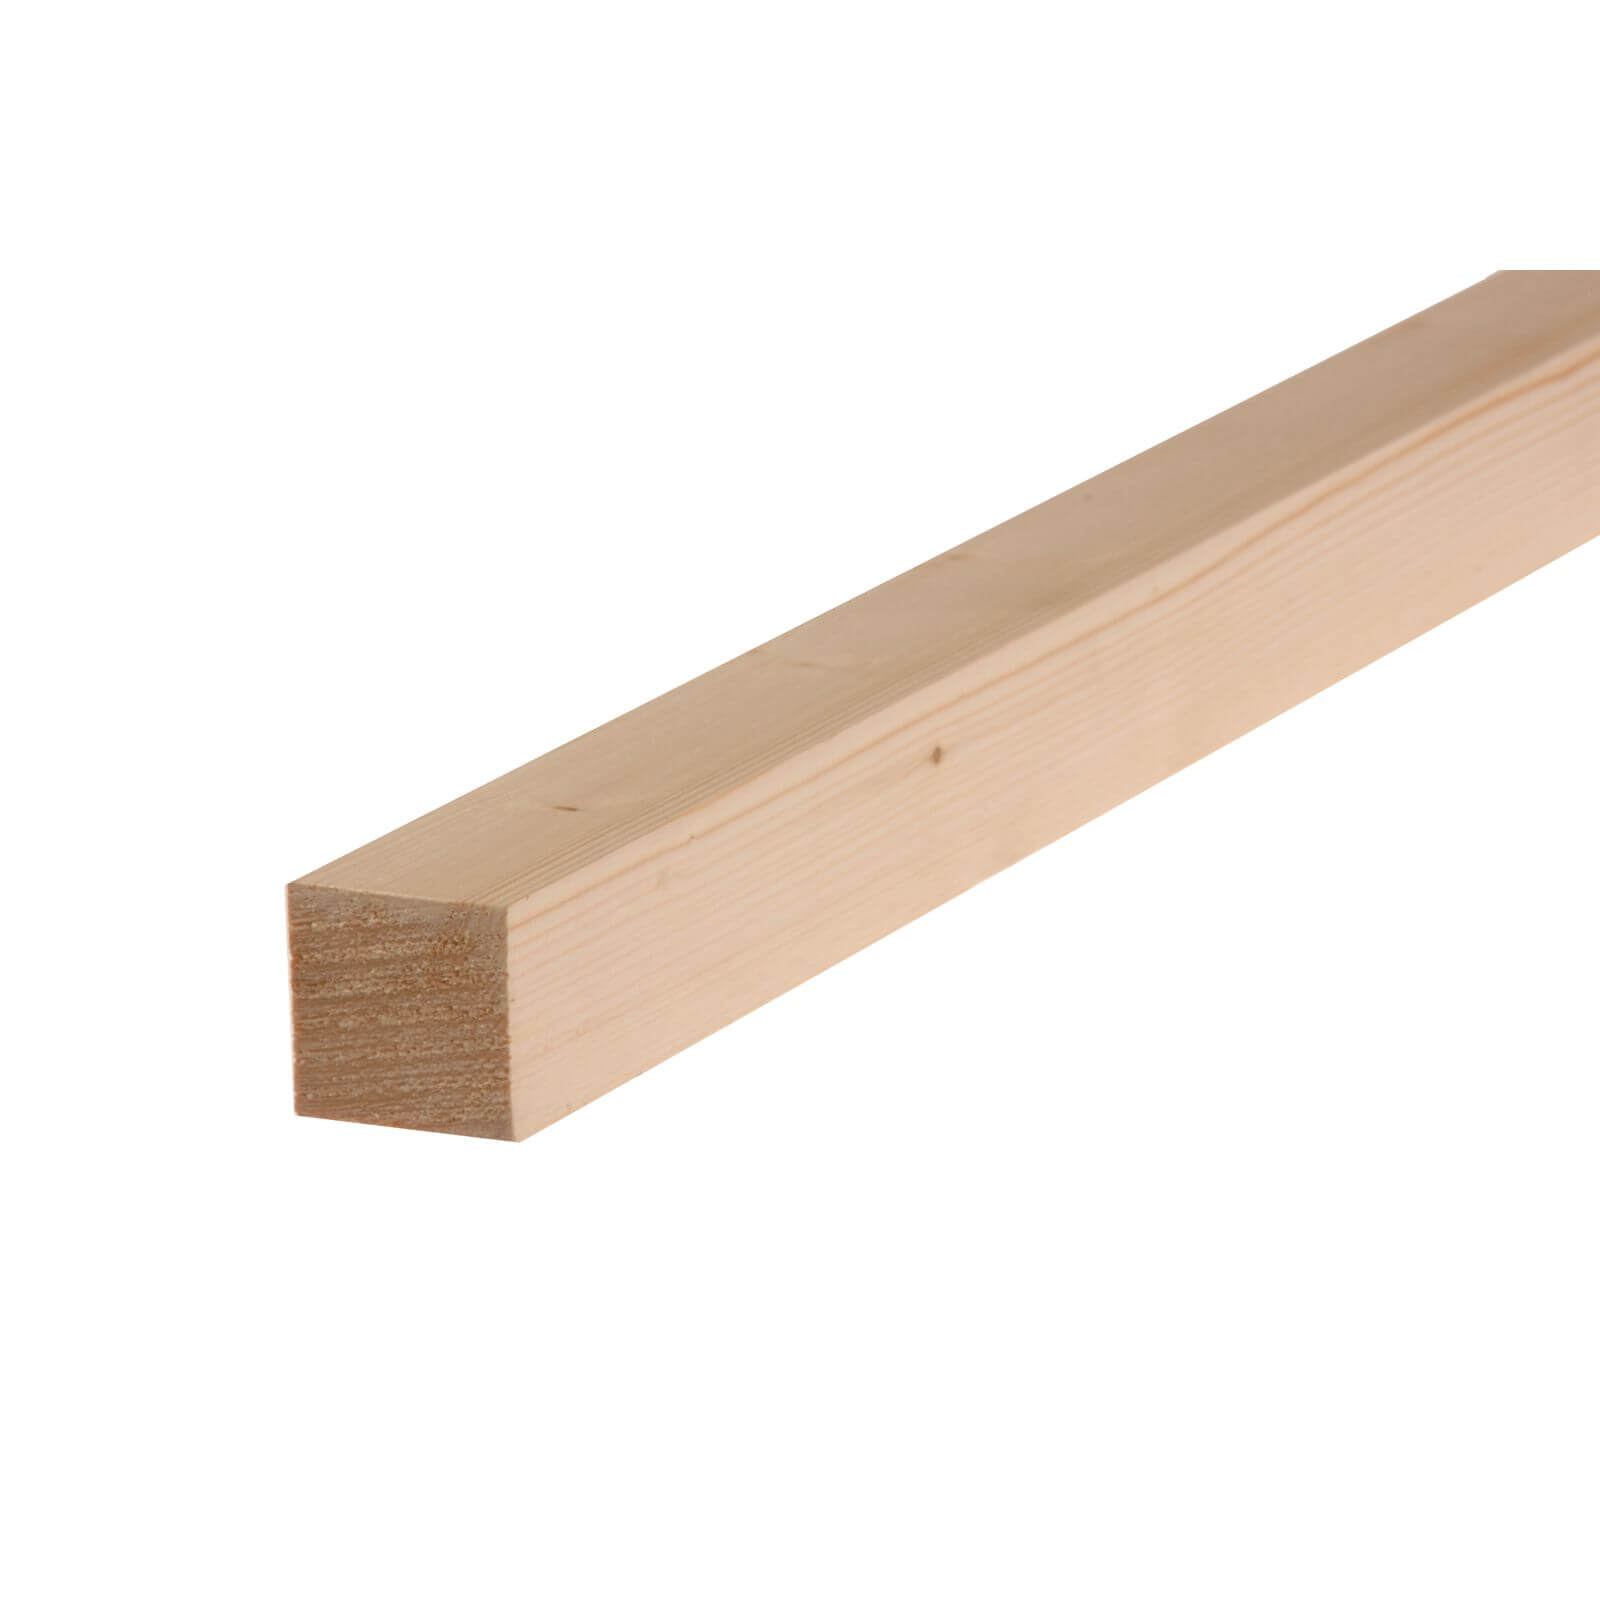 Metsa Planed Square Edge Stick Softwood Timber 2.4m (44 x 44 x 2400mm)